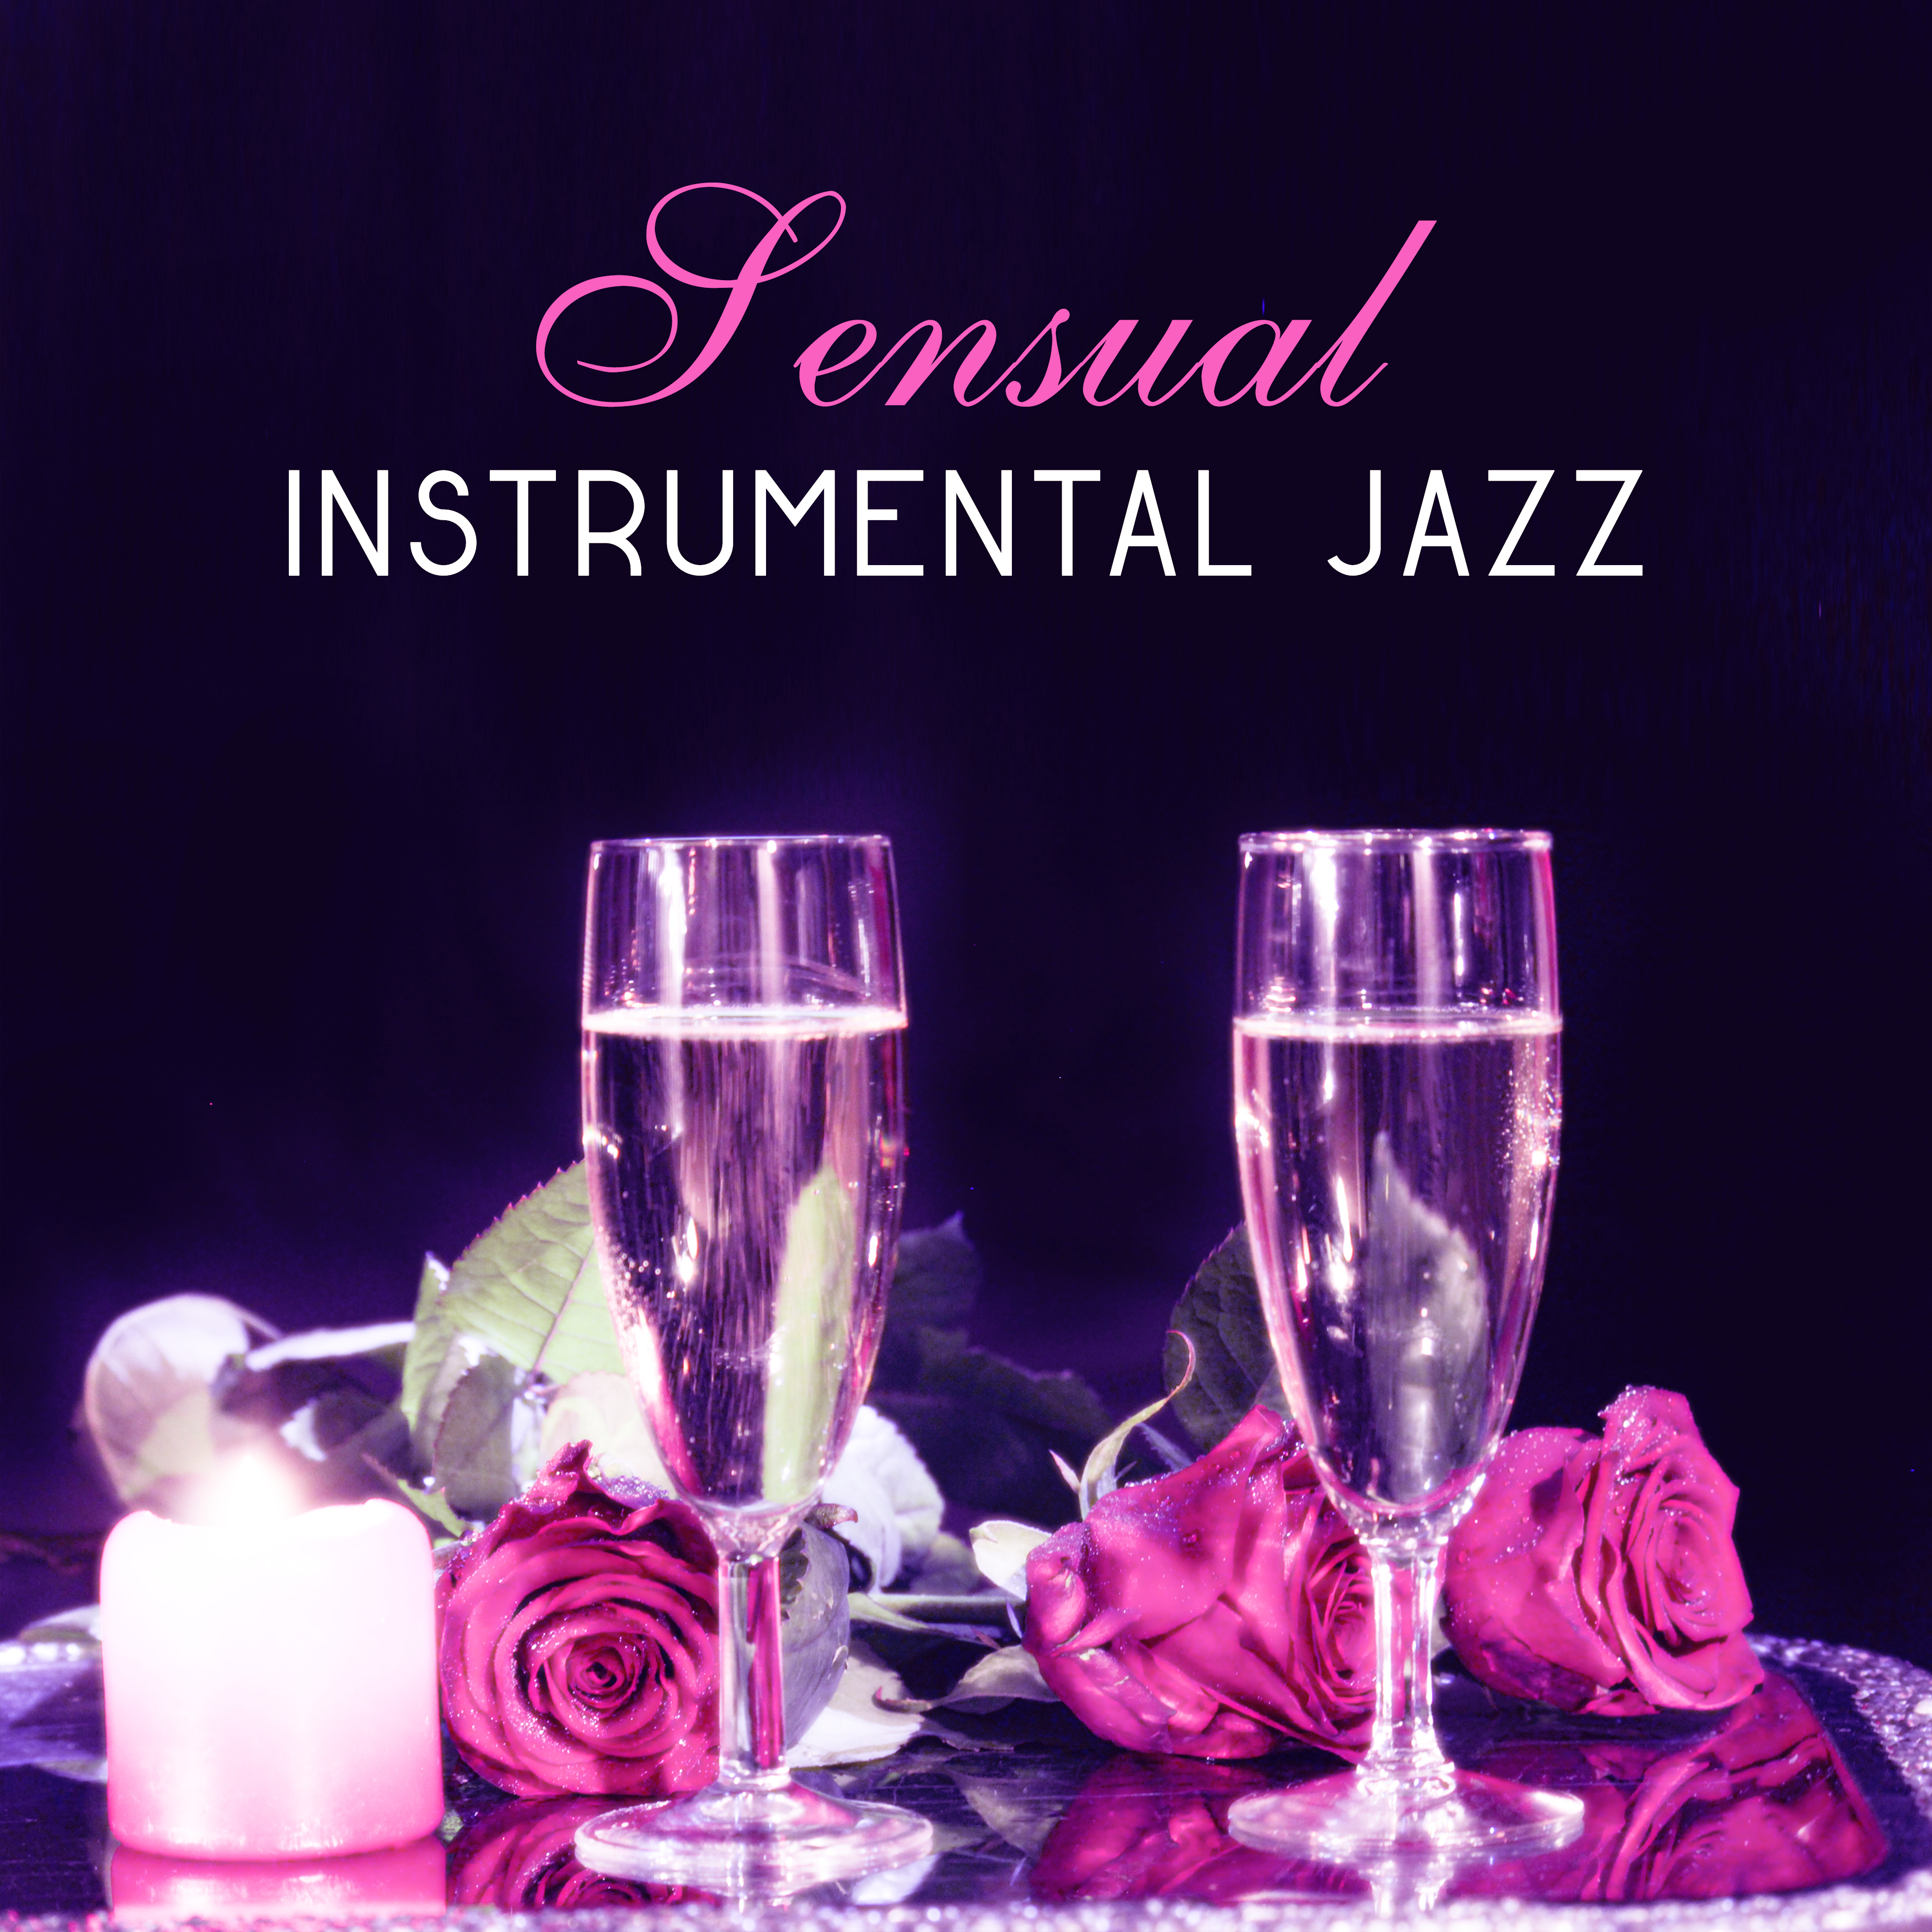 Sensual Instrumental Jazz – Gentle Sounds of Jazz, Music for Lovers, Beautiful Romantic Jazz